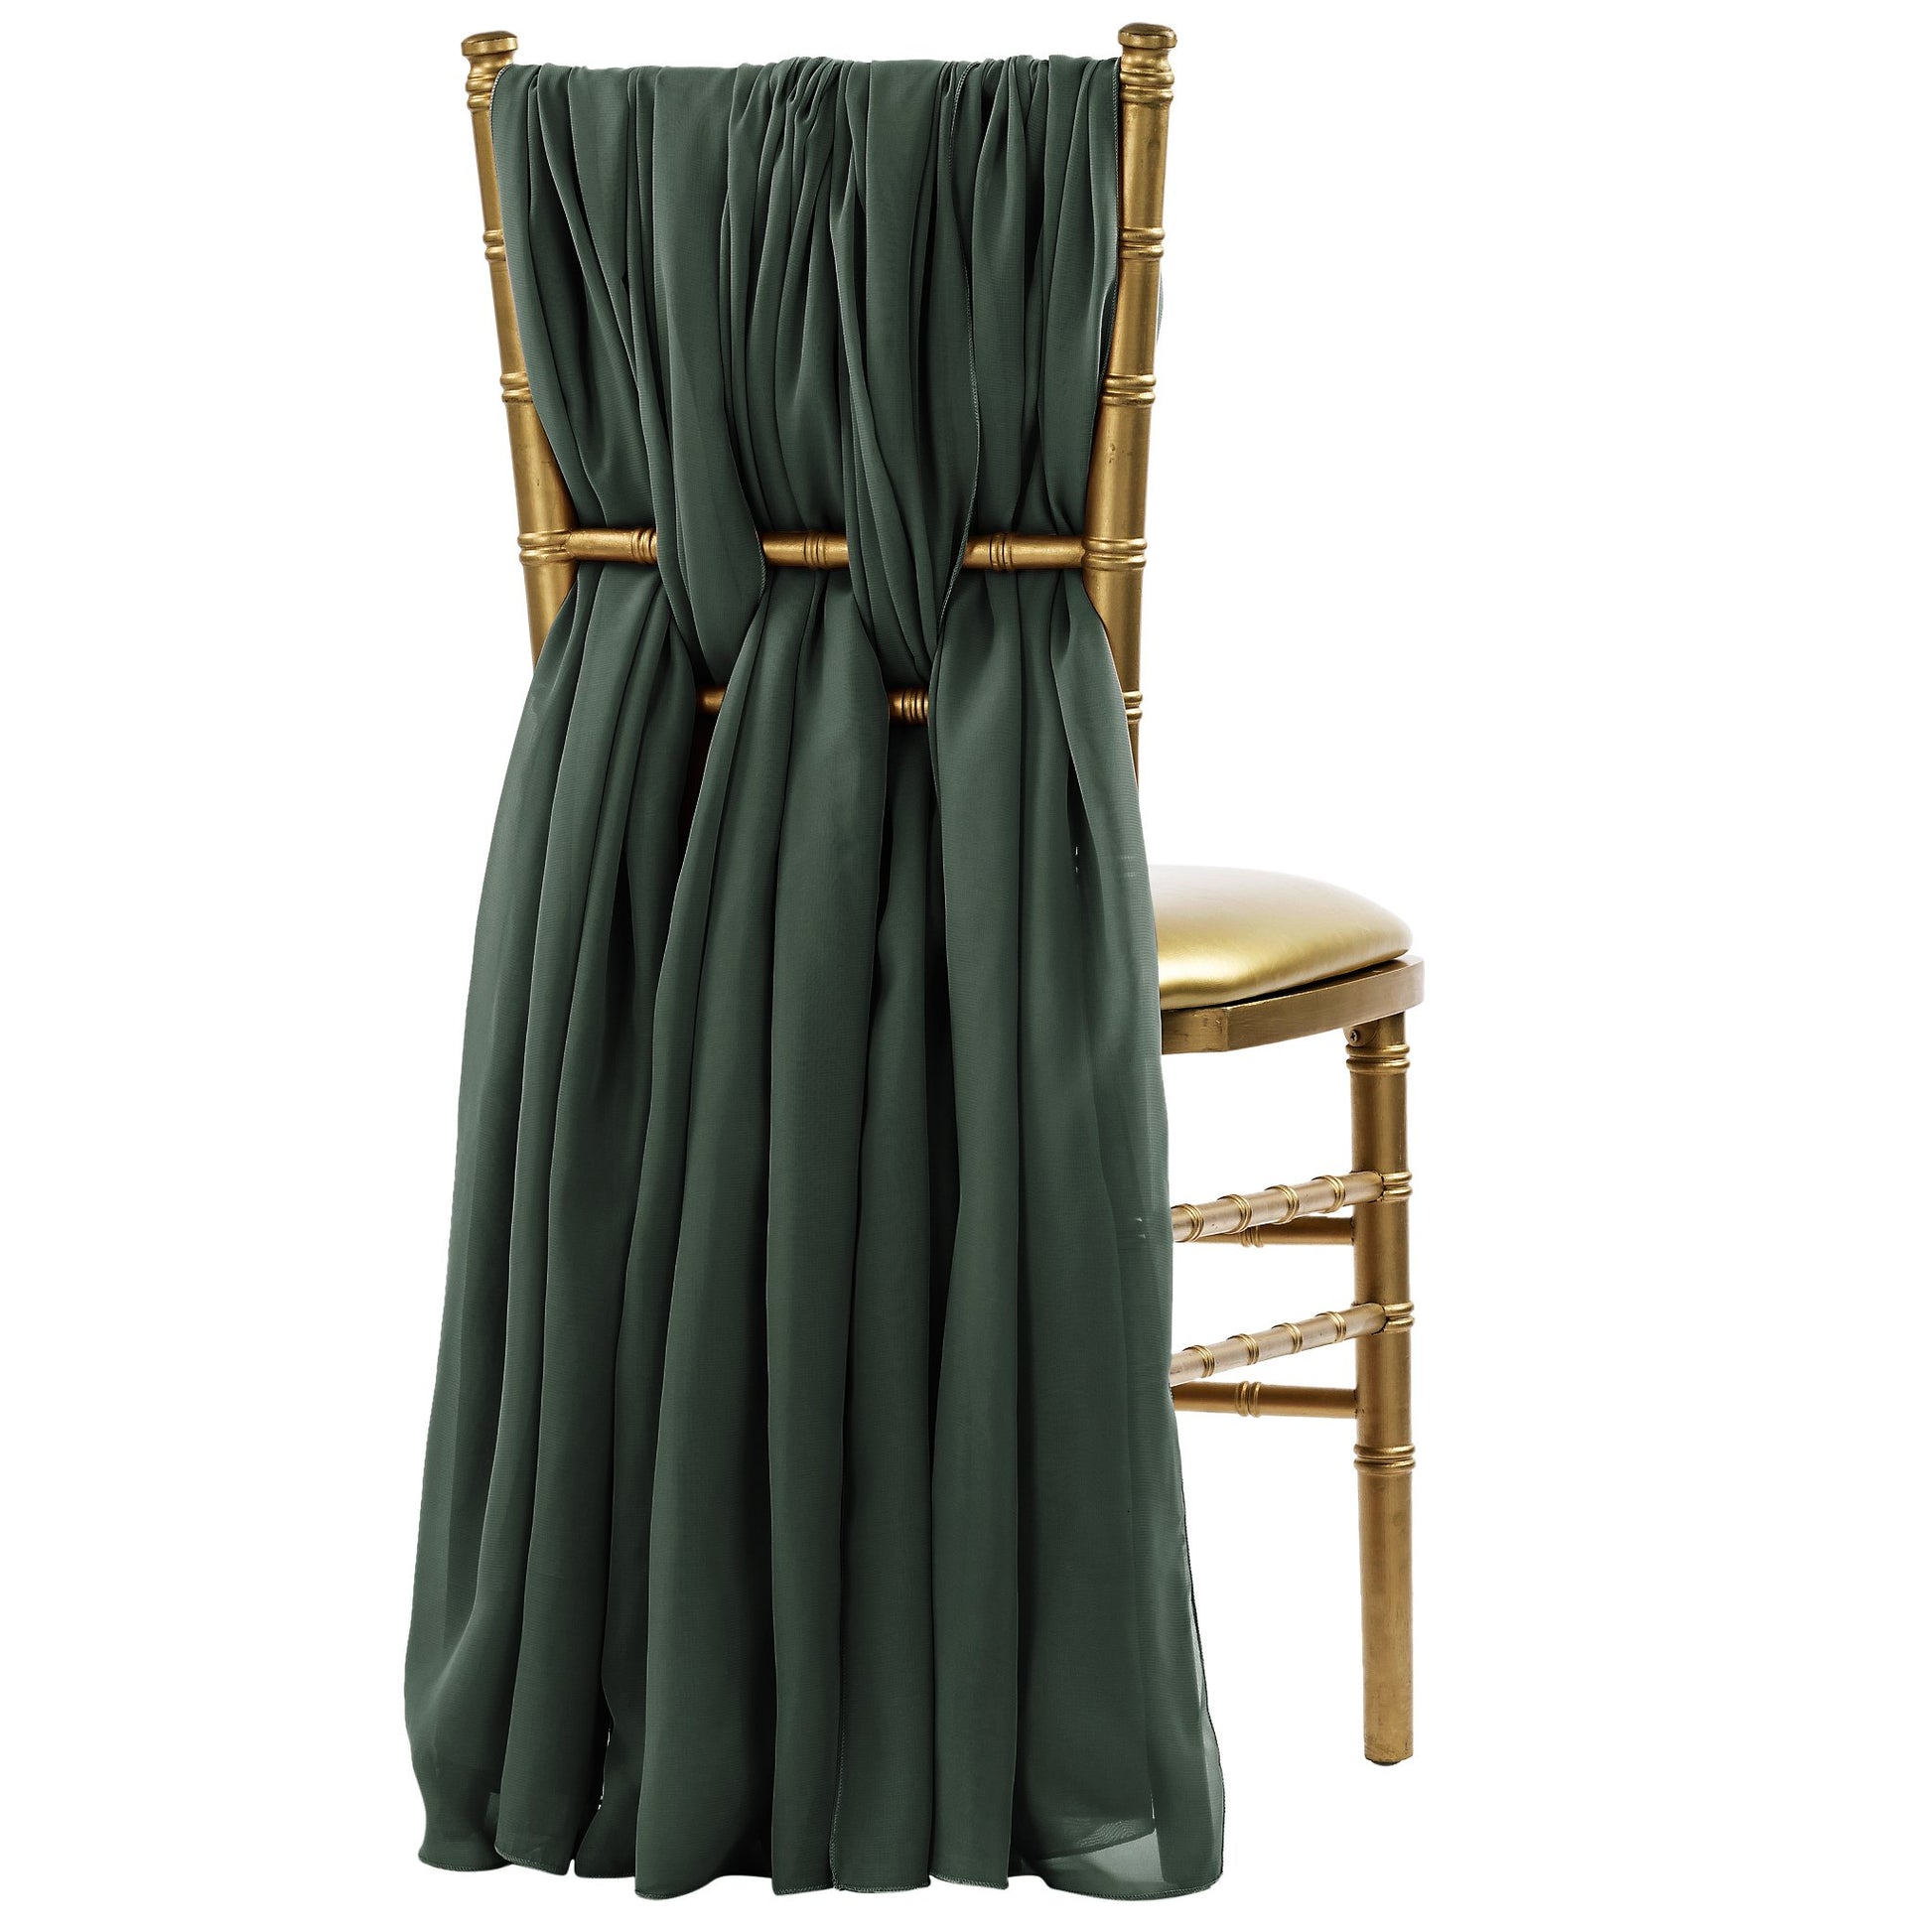 5pcs Pack of Chiffon Chair Sashes/Ties - Hunter Green - CV Linens